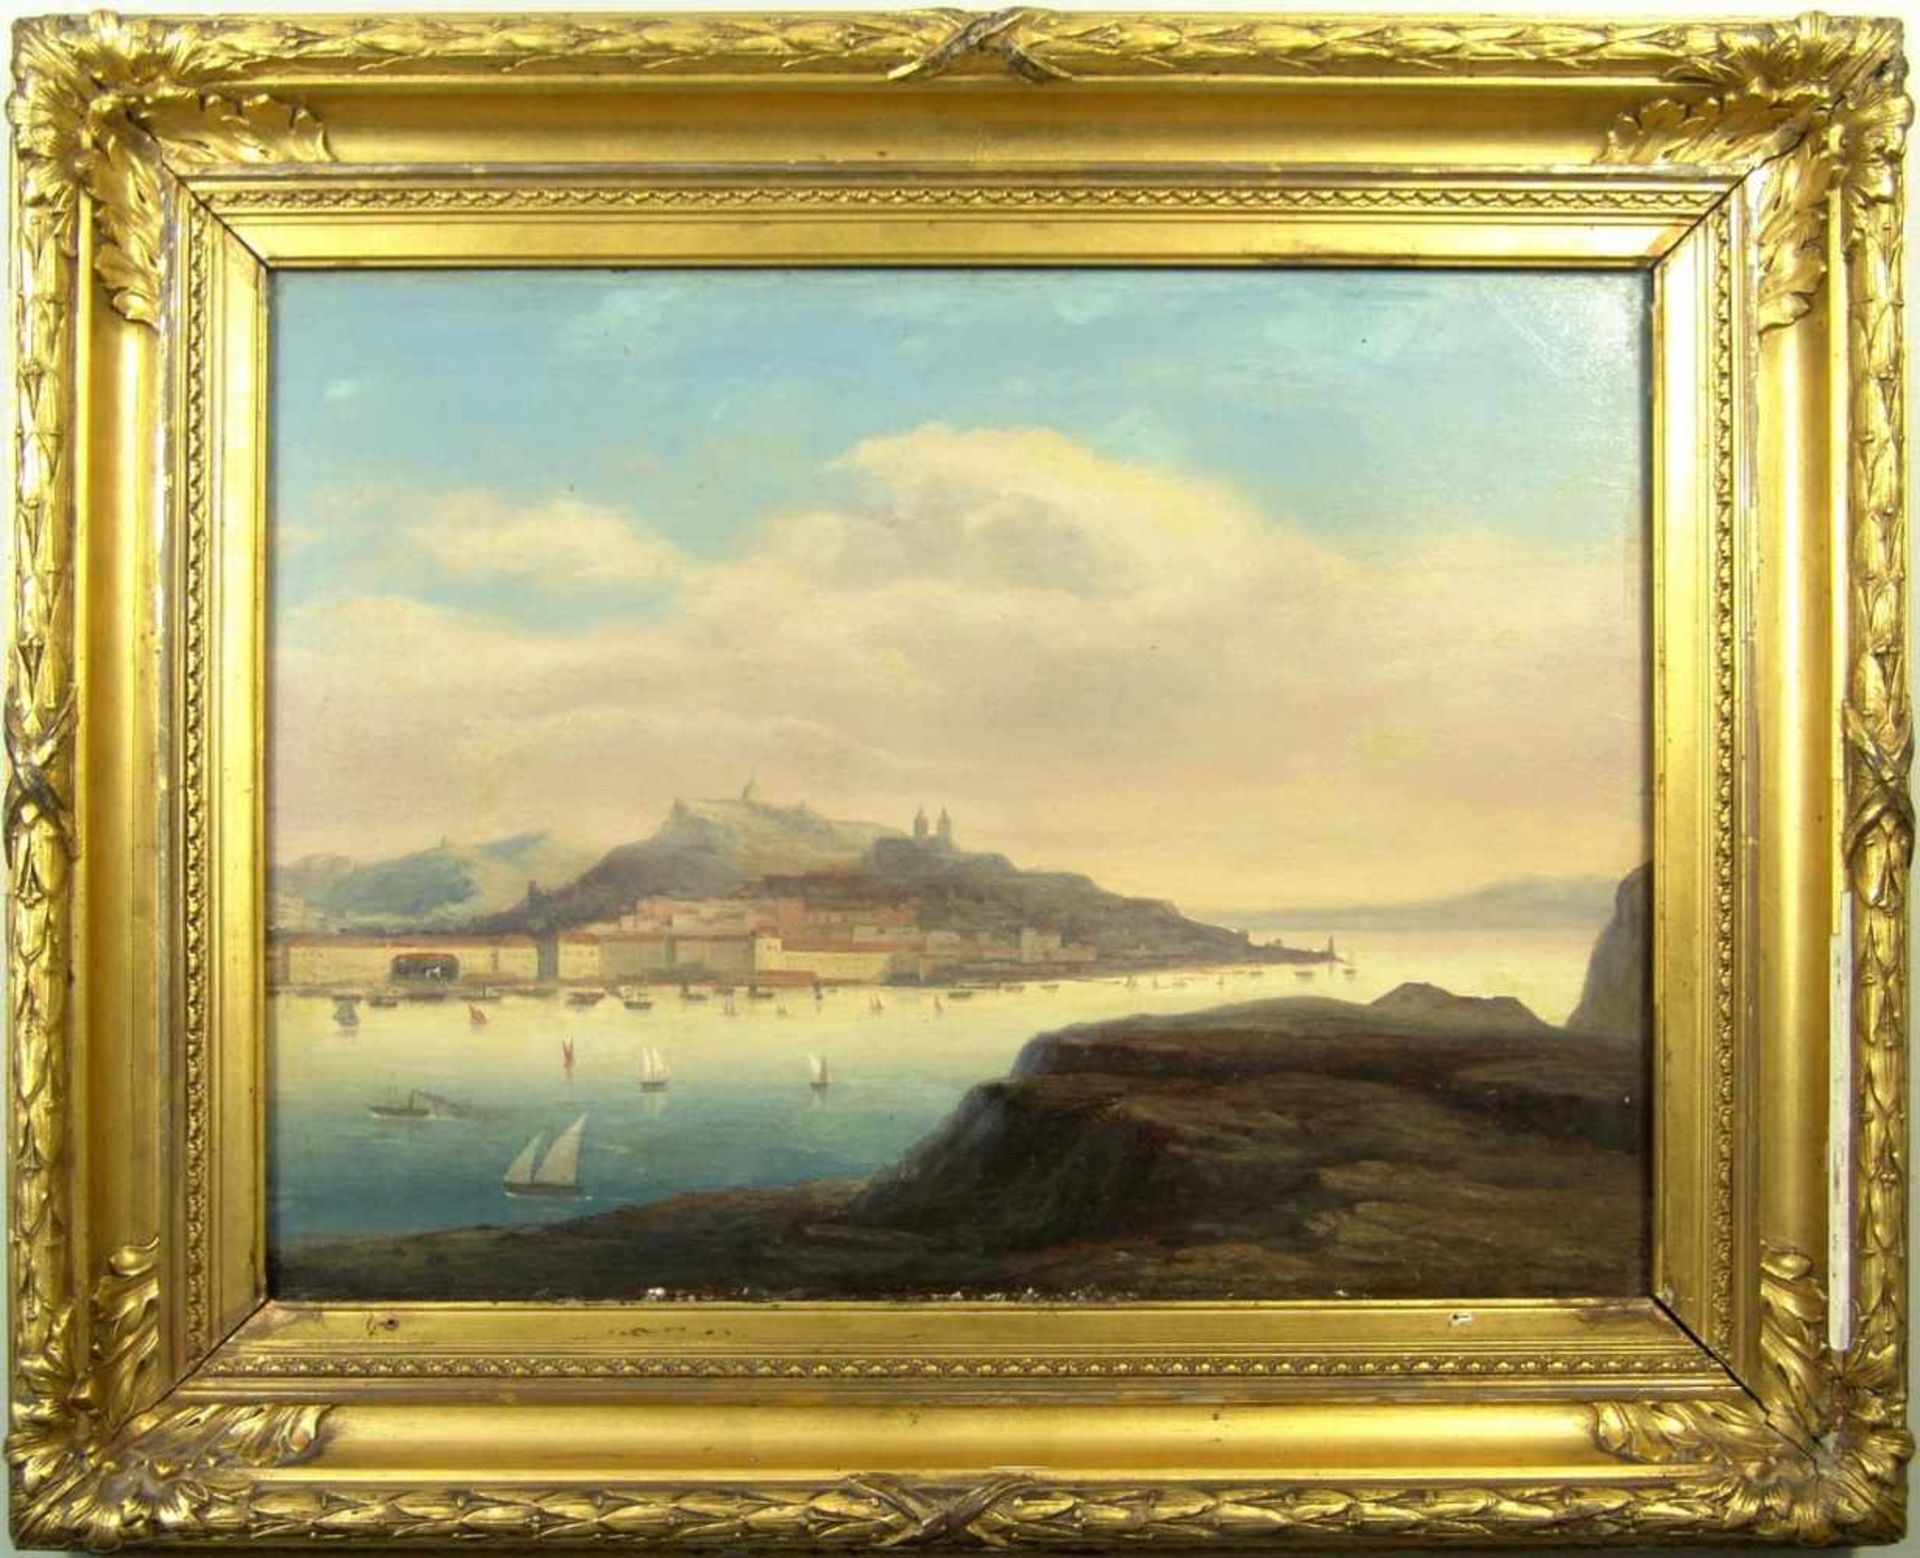 Maler der Romatik, Stadtsilhouette vor bergiger Kulisse, wohl Italien, 19. Jh.Öl/Holz, See mit